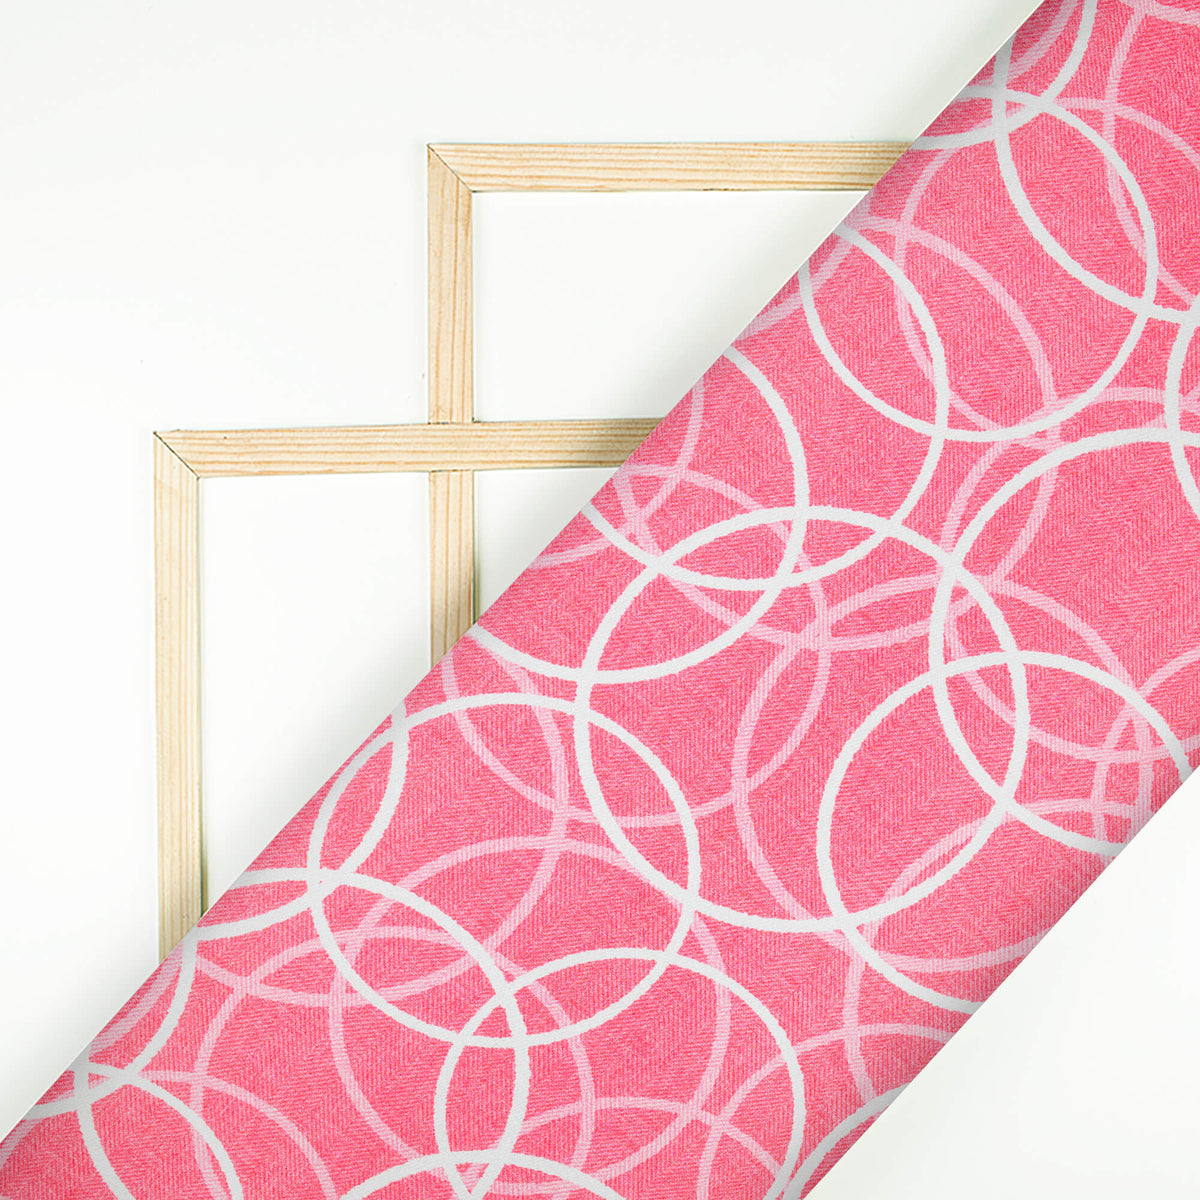 Hot Pink And White Geometric Pattern Digital Print Premium Lush Satin Fabric